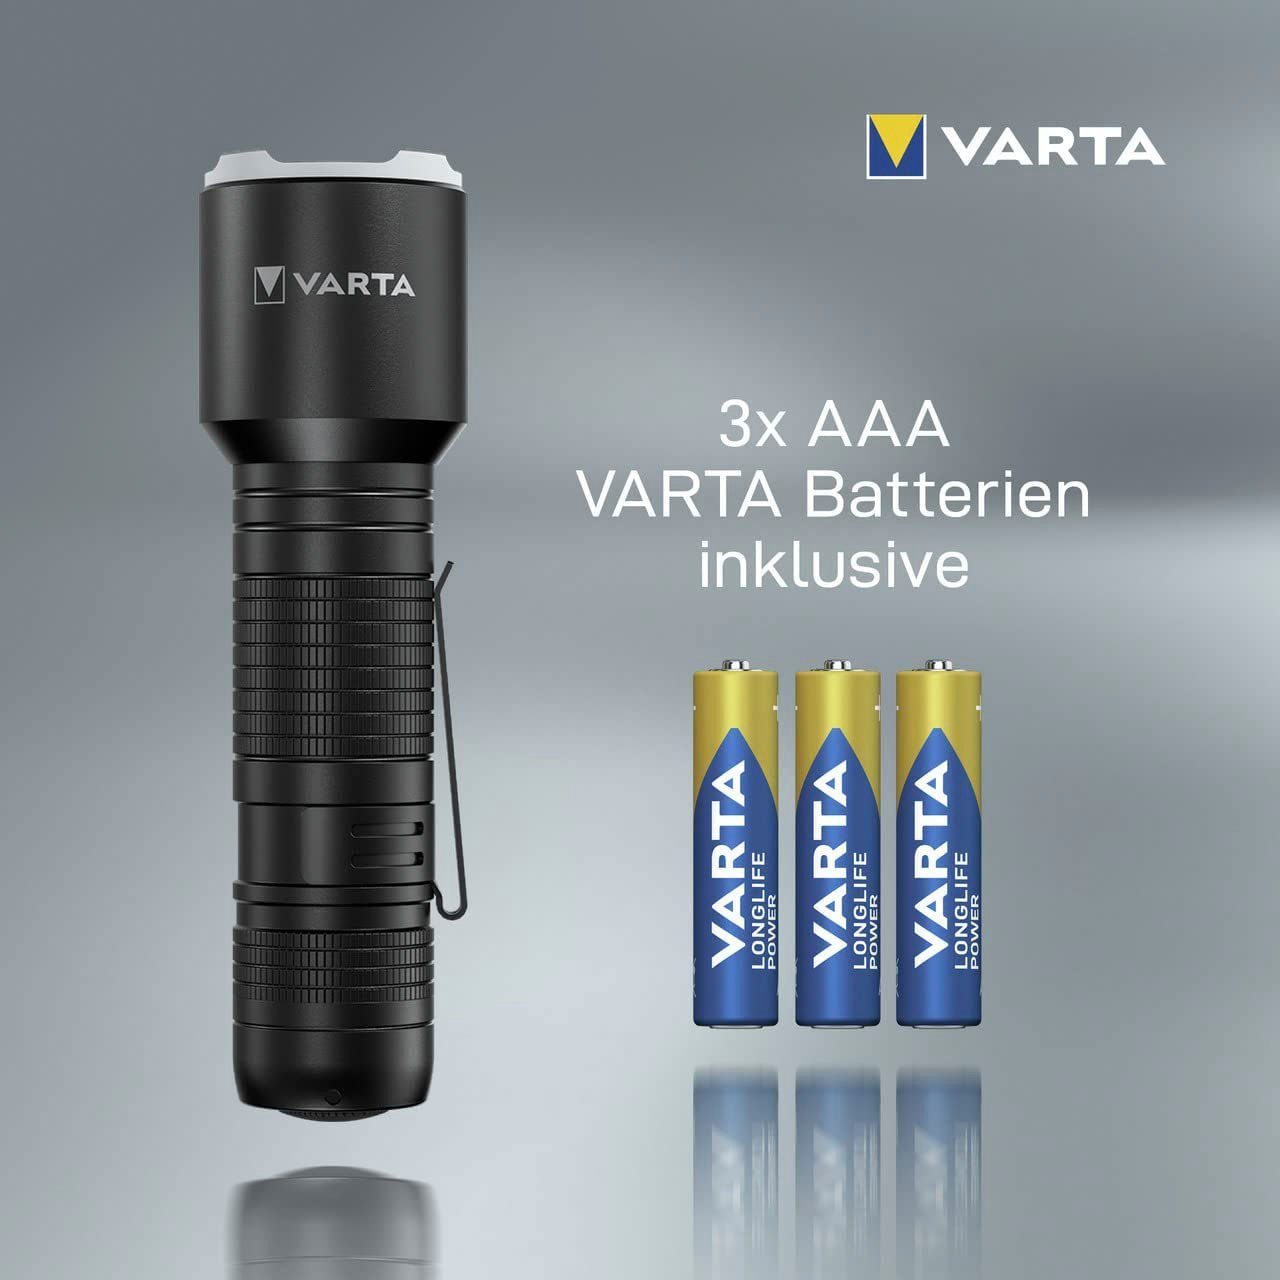 Light Taschenlampe VARTA Pro F30 Aluminium